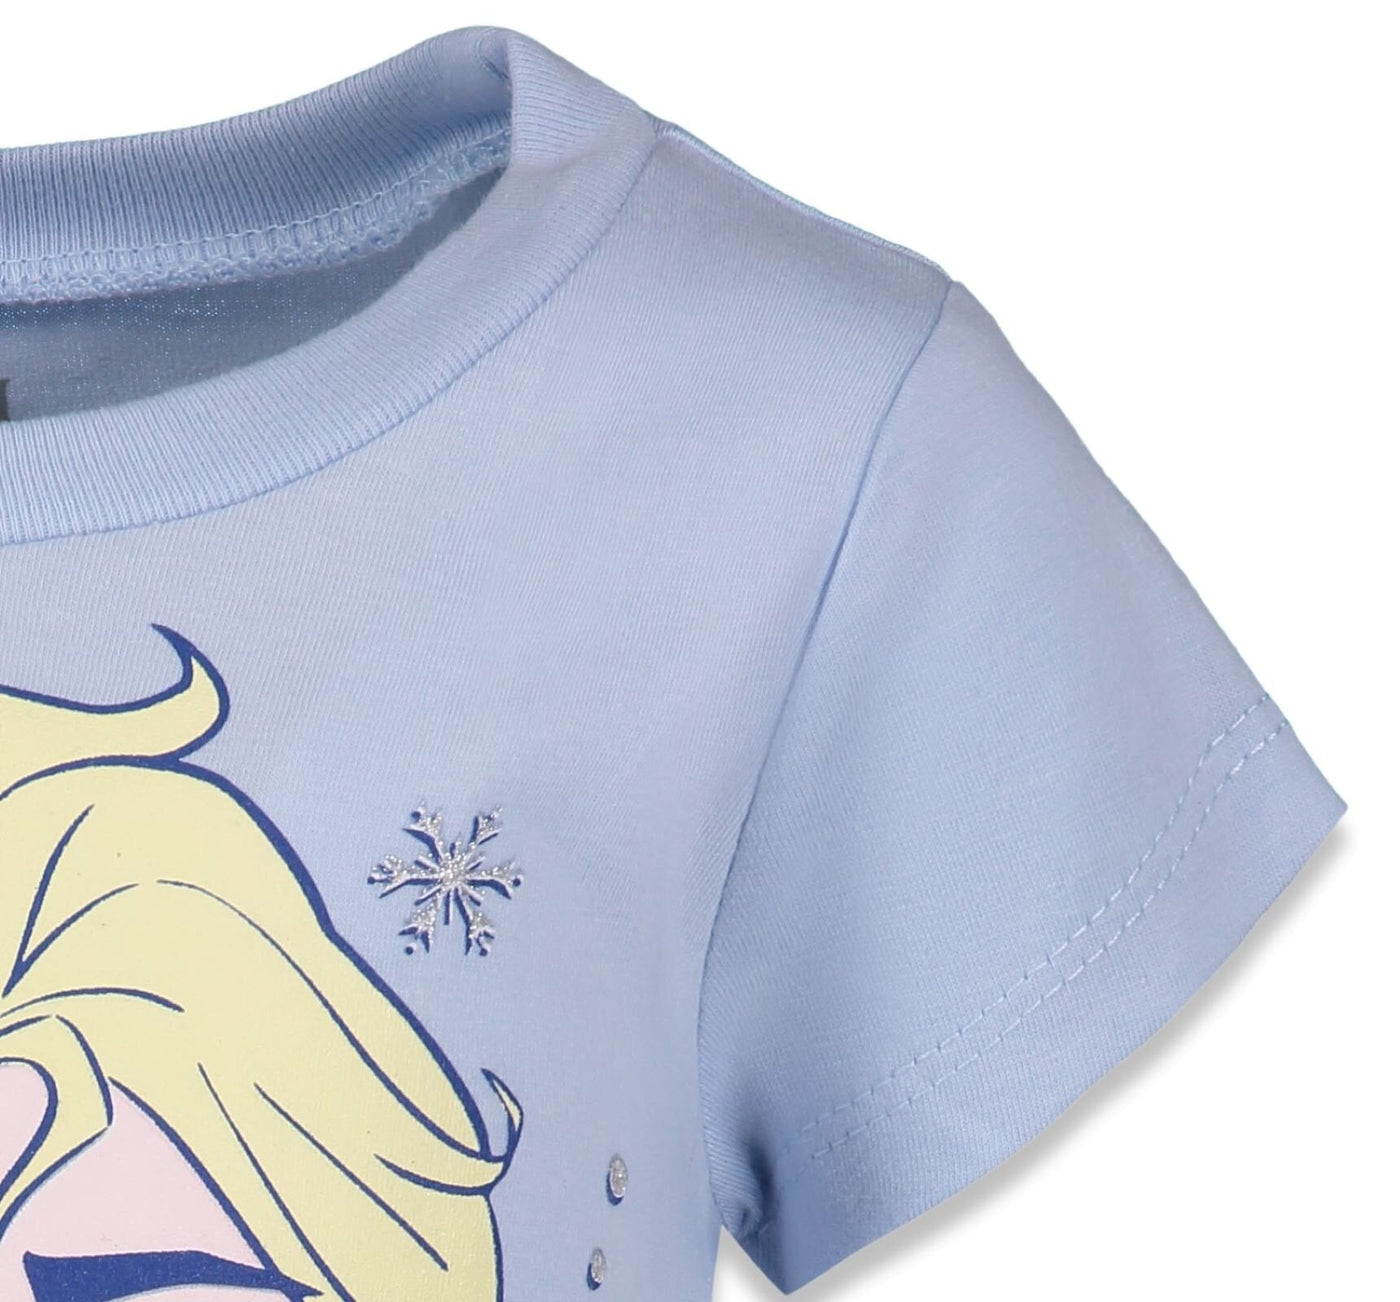 Disney Frozen 3 Pack T-Shirts - imagikids